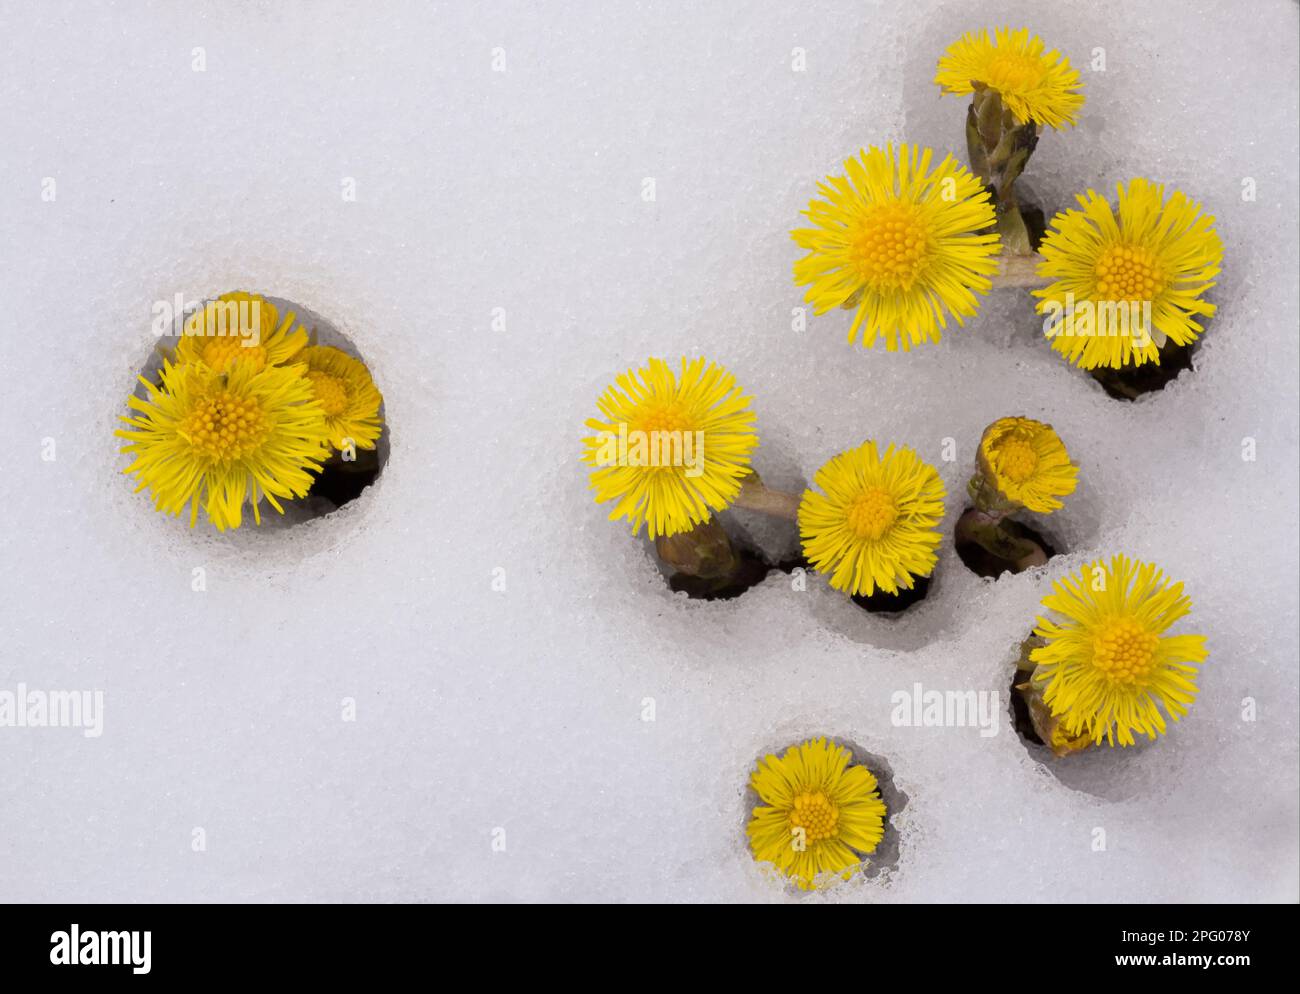 Coltsfoot (Tussilago farfara) flowering, appearing through fresh snow, Swiss Alps, Switzerland Stock Photo